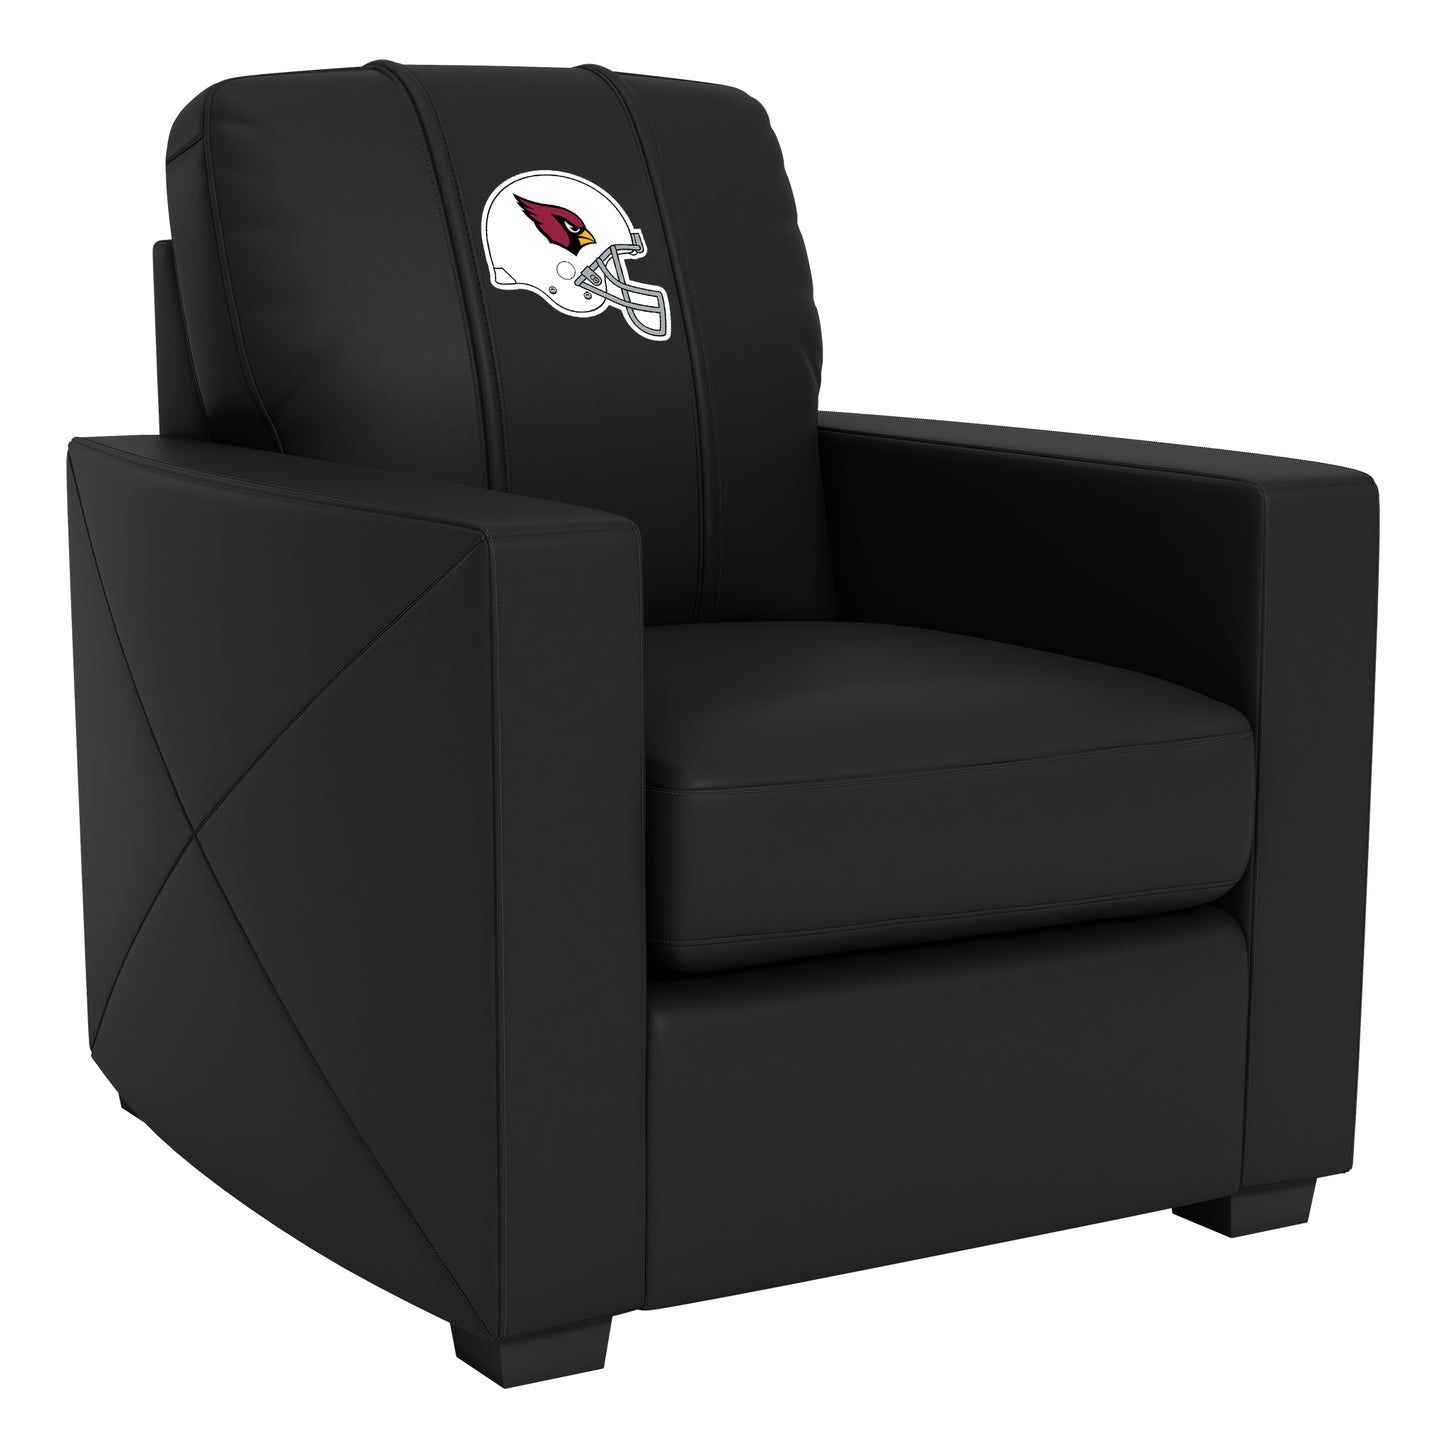 Silver Club Chair with Arizona Cardinals Helmet Logo